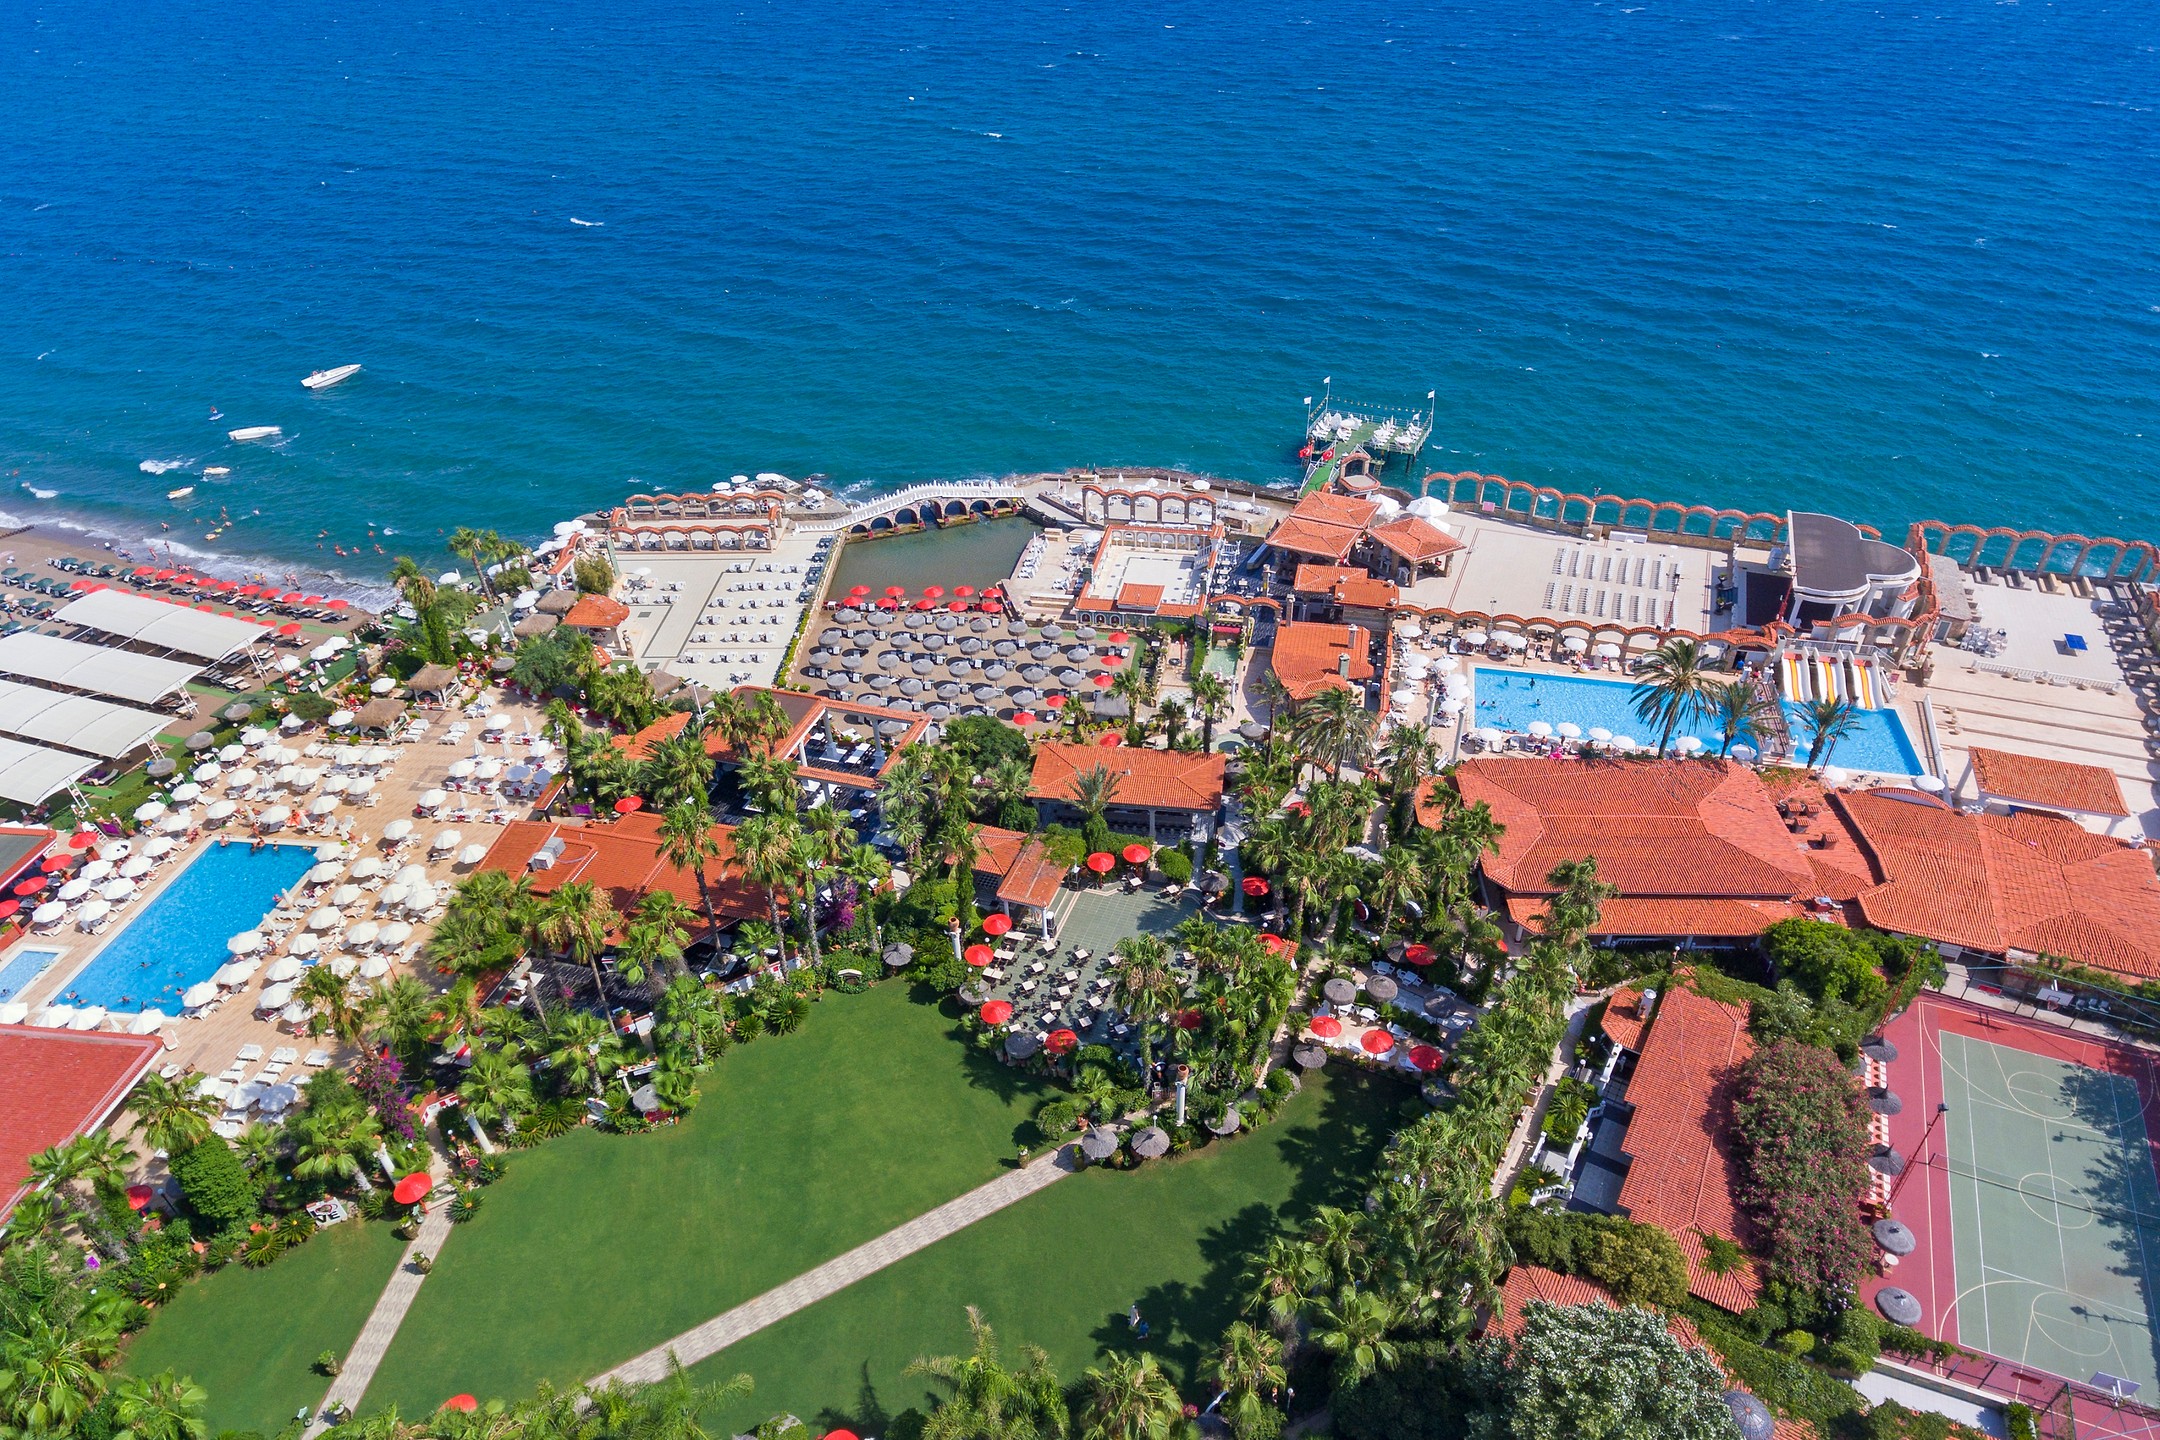 Letovanje Turska,avionom, Antalija, hotel Club hotel Sera,panorama